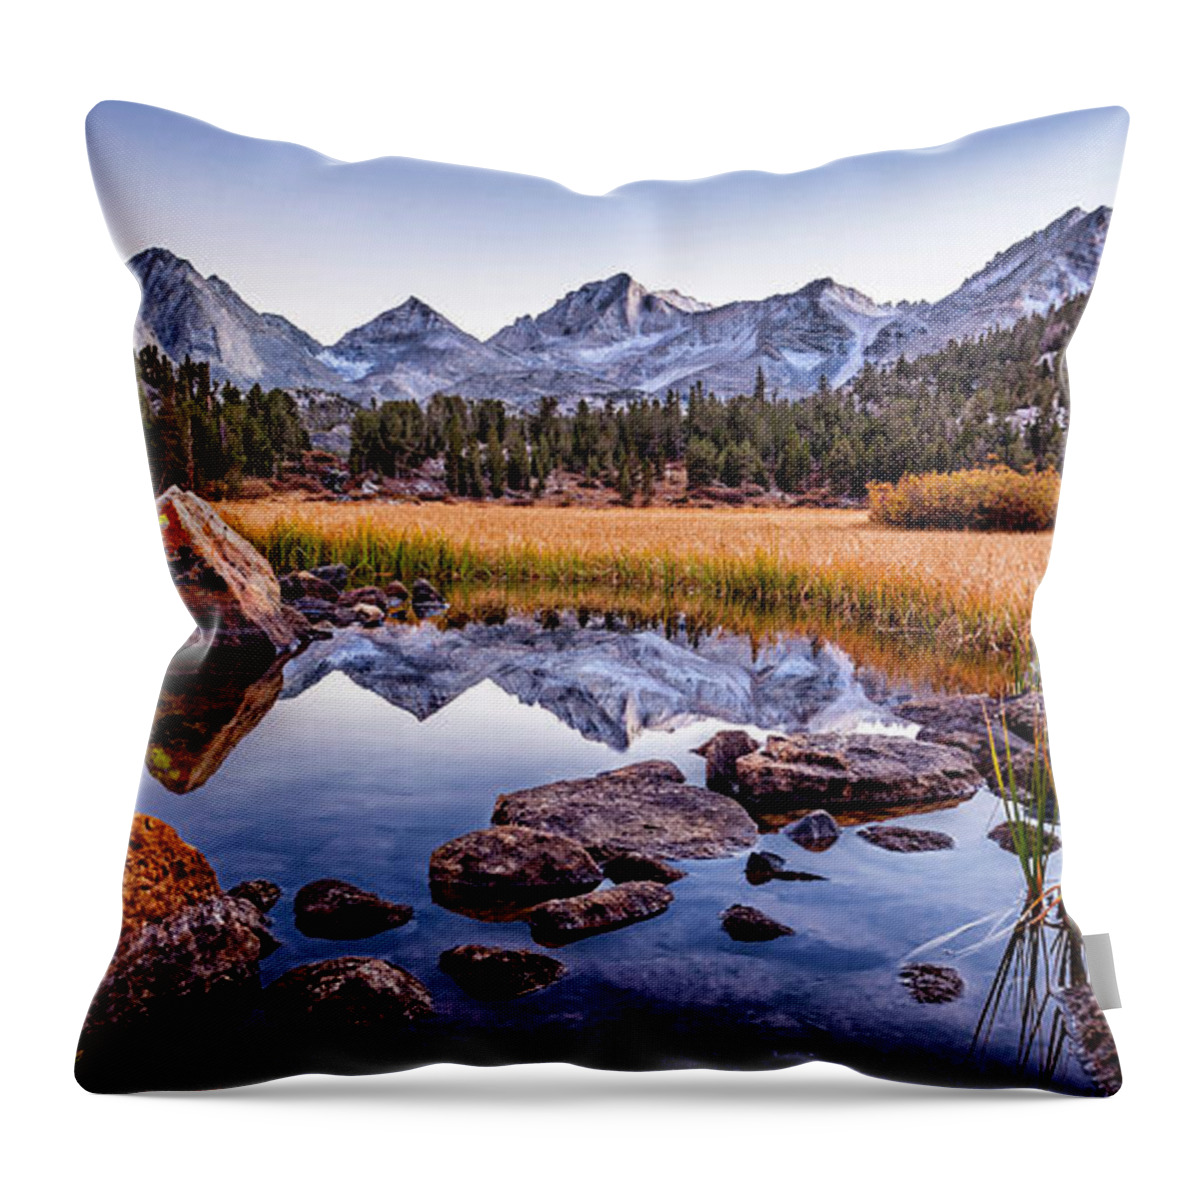 Rock-creek-canyon Throw Pillow featuring the photograph Rock Creek Canyon by Gary Johnson